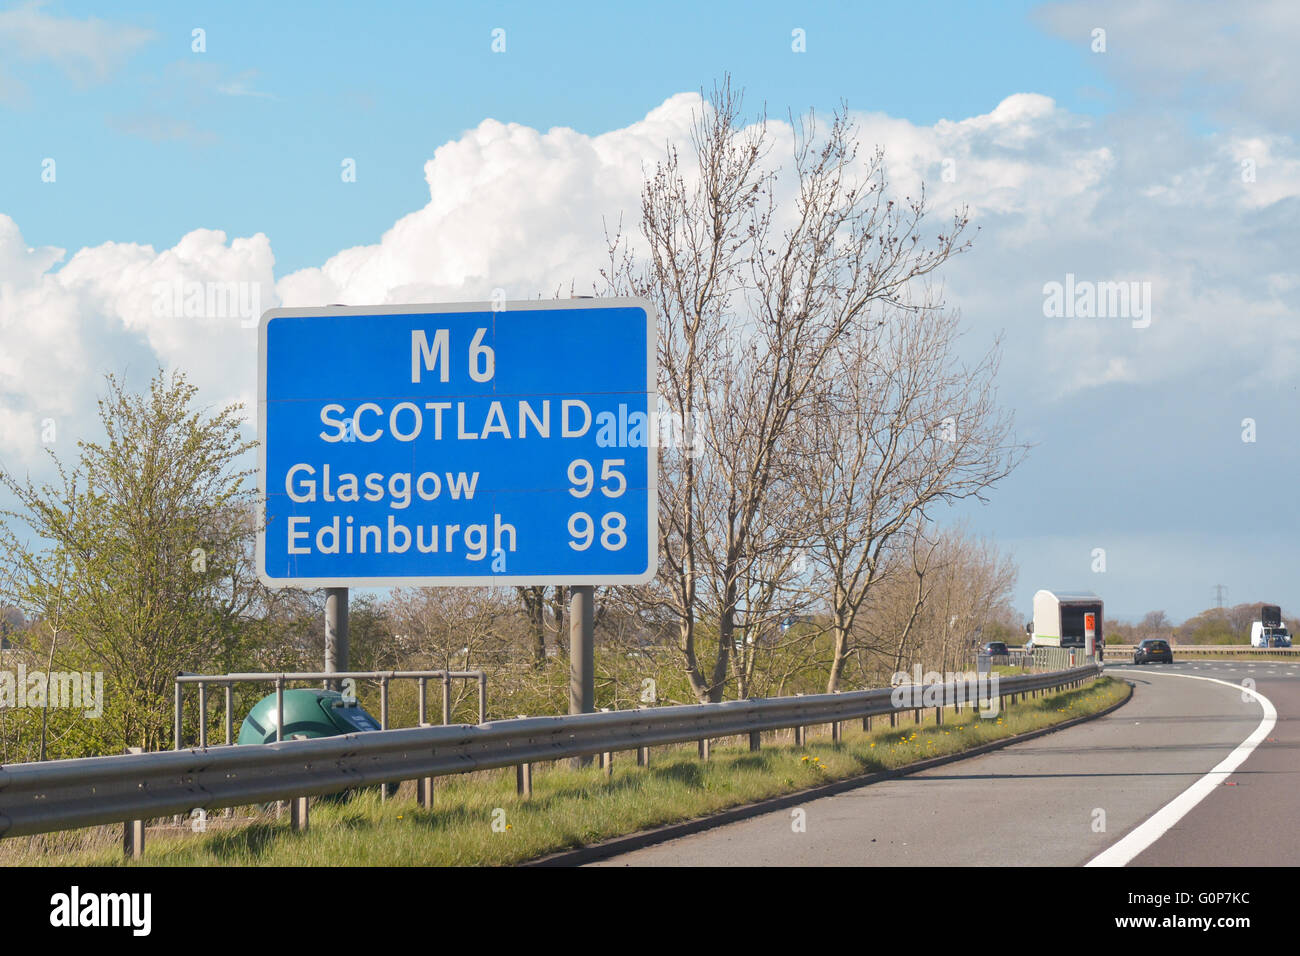 M6 motorway sign - heading towards Glasgow, Edinburgh, Scotland, UK Stock Photo